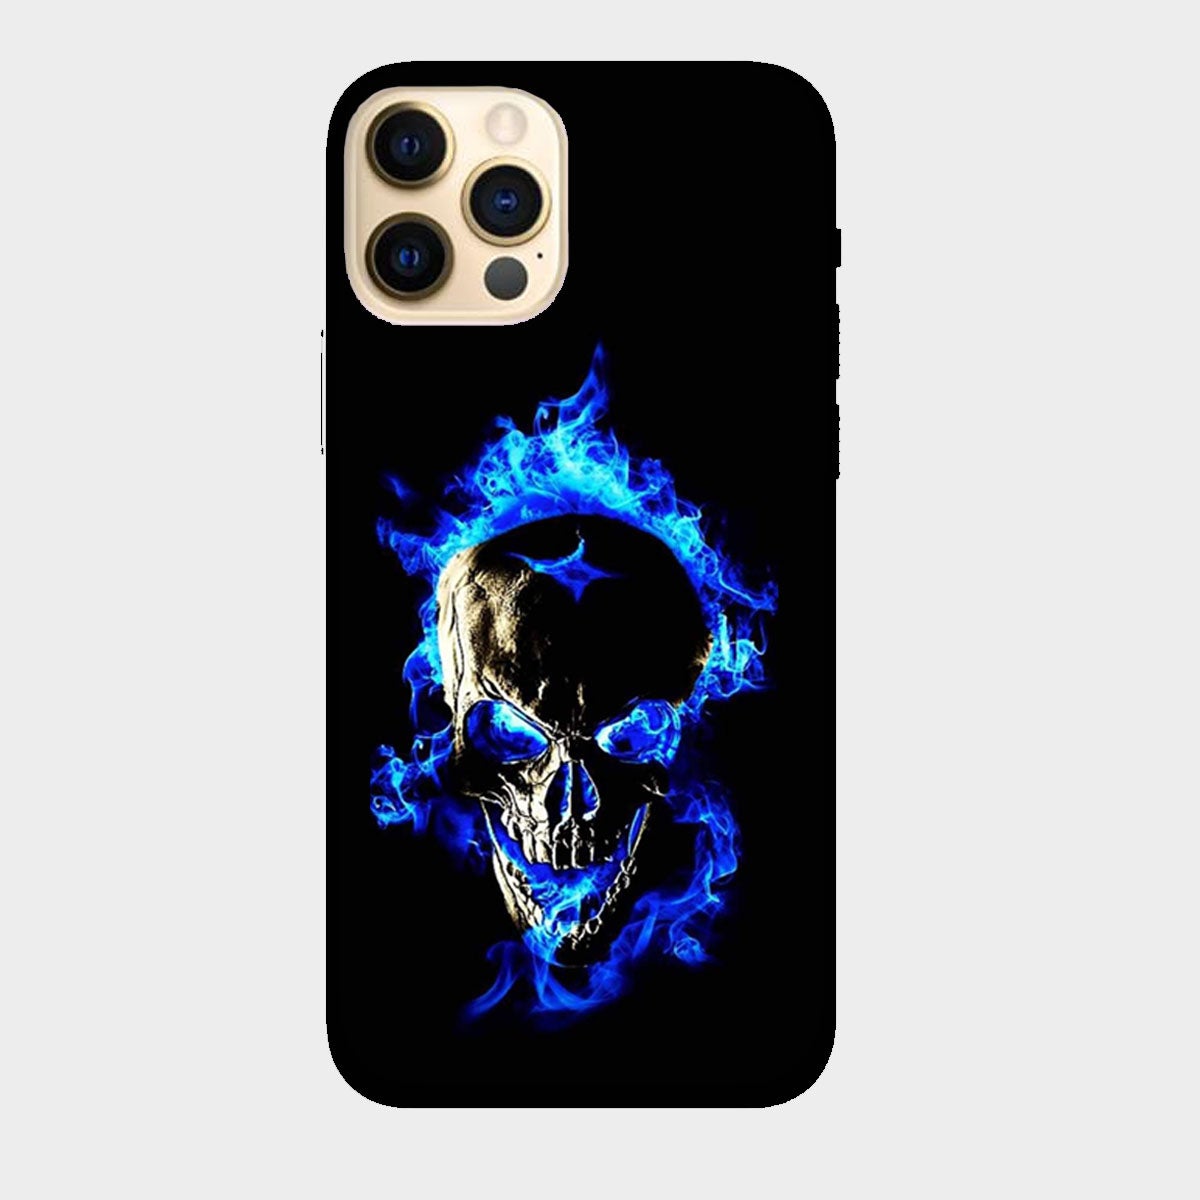 Skulls - Mobile Phone Cover - Hard Case